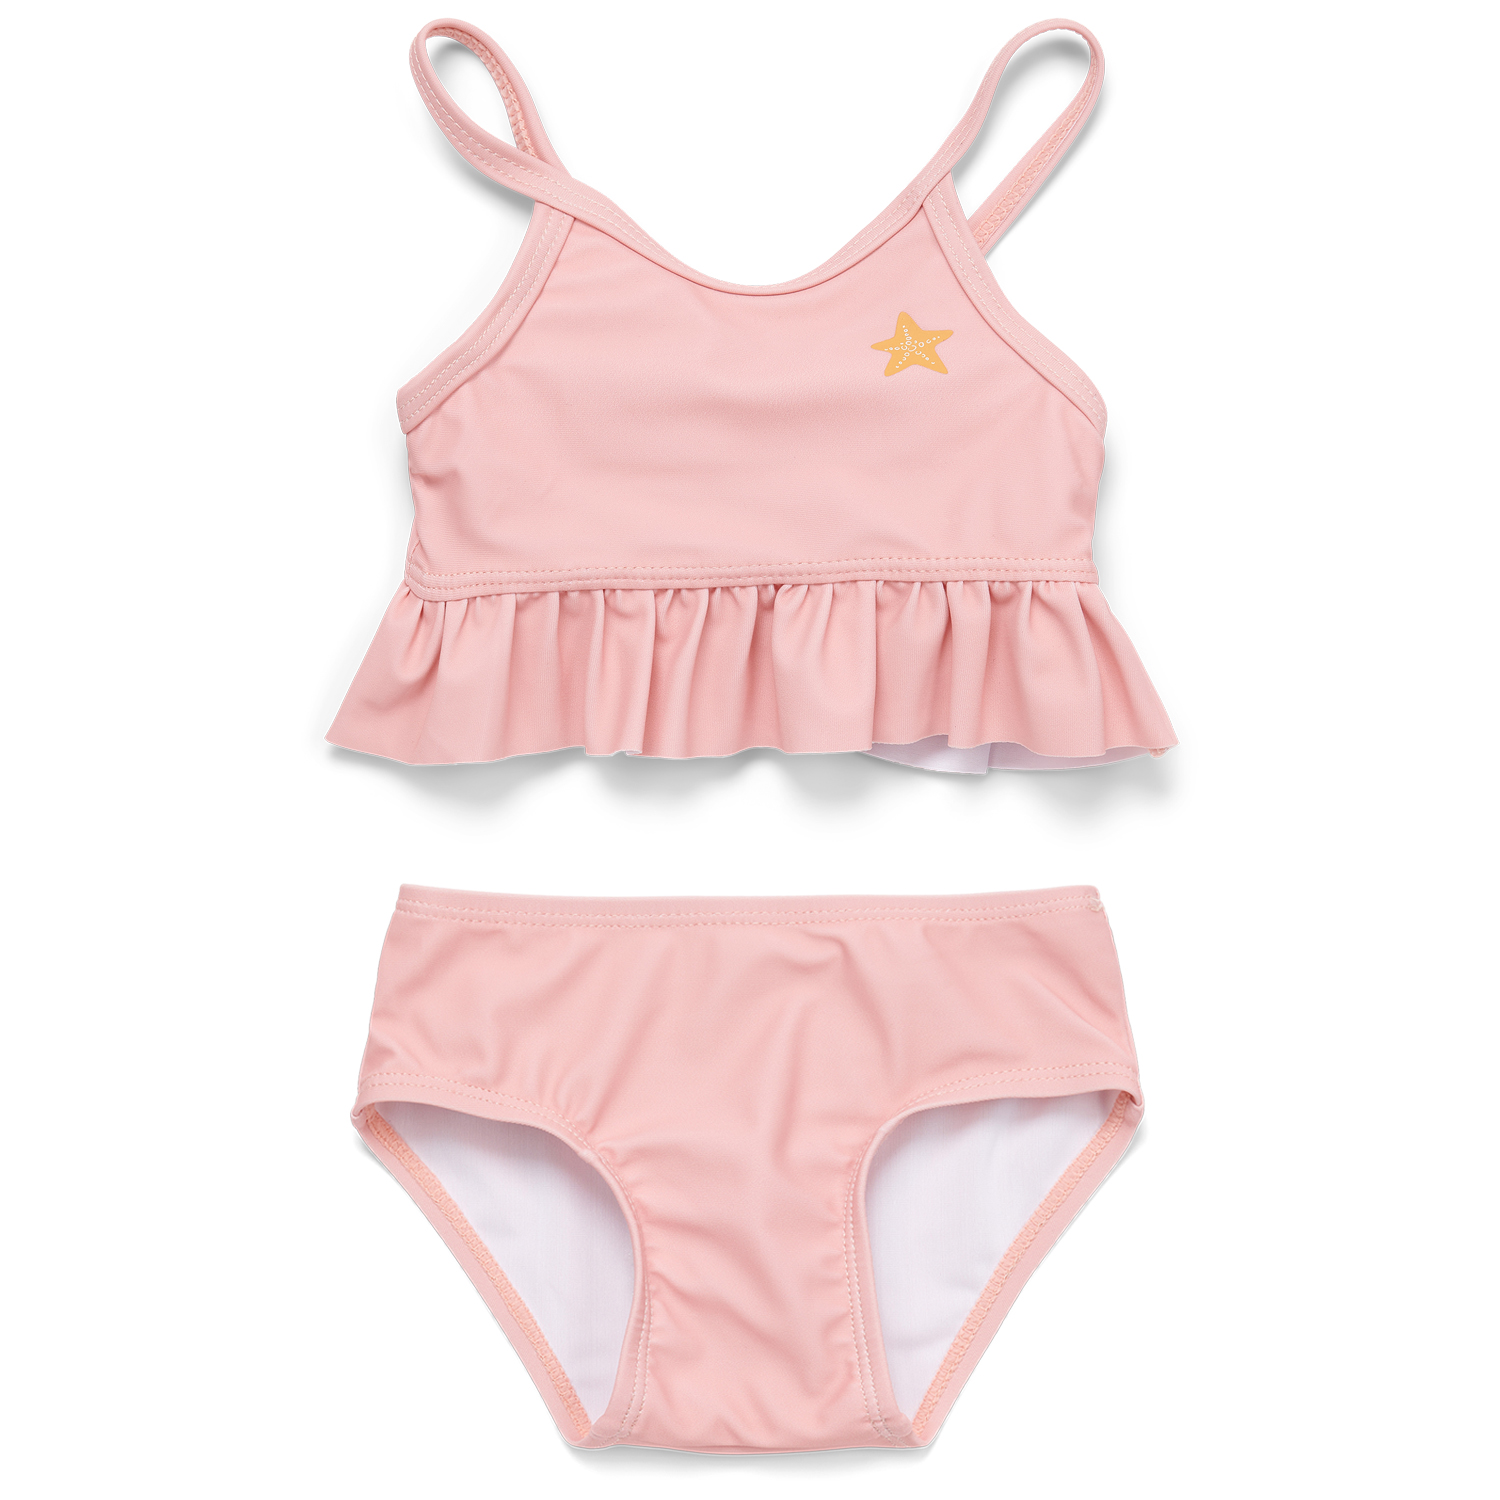 Bikini mit Volants / Rüschen Starfish Pink rosa (Gr. 86/92)